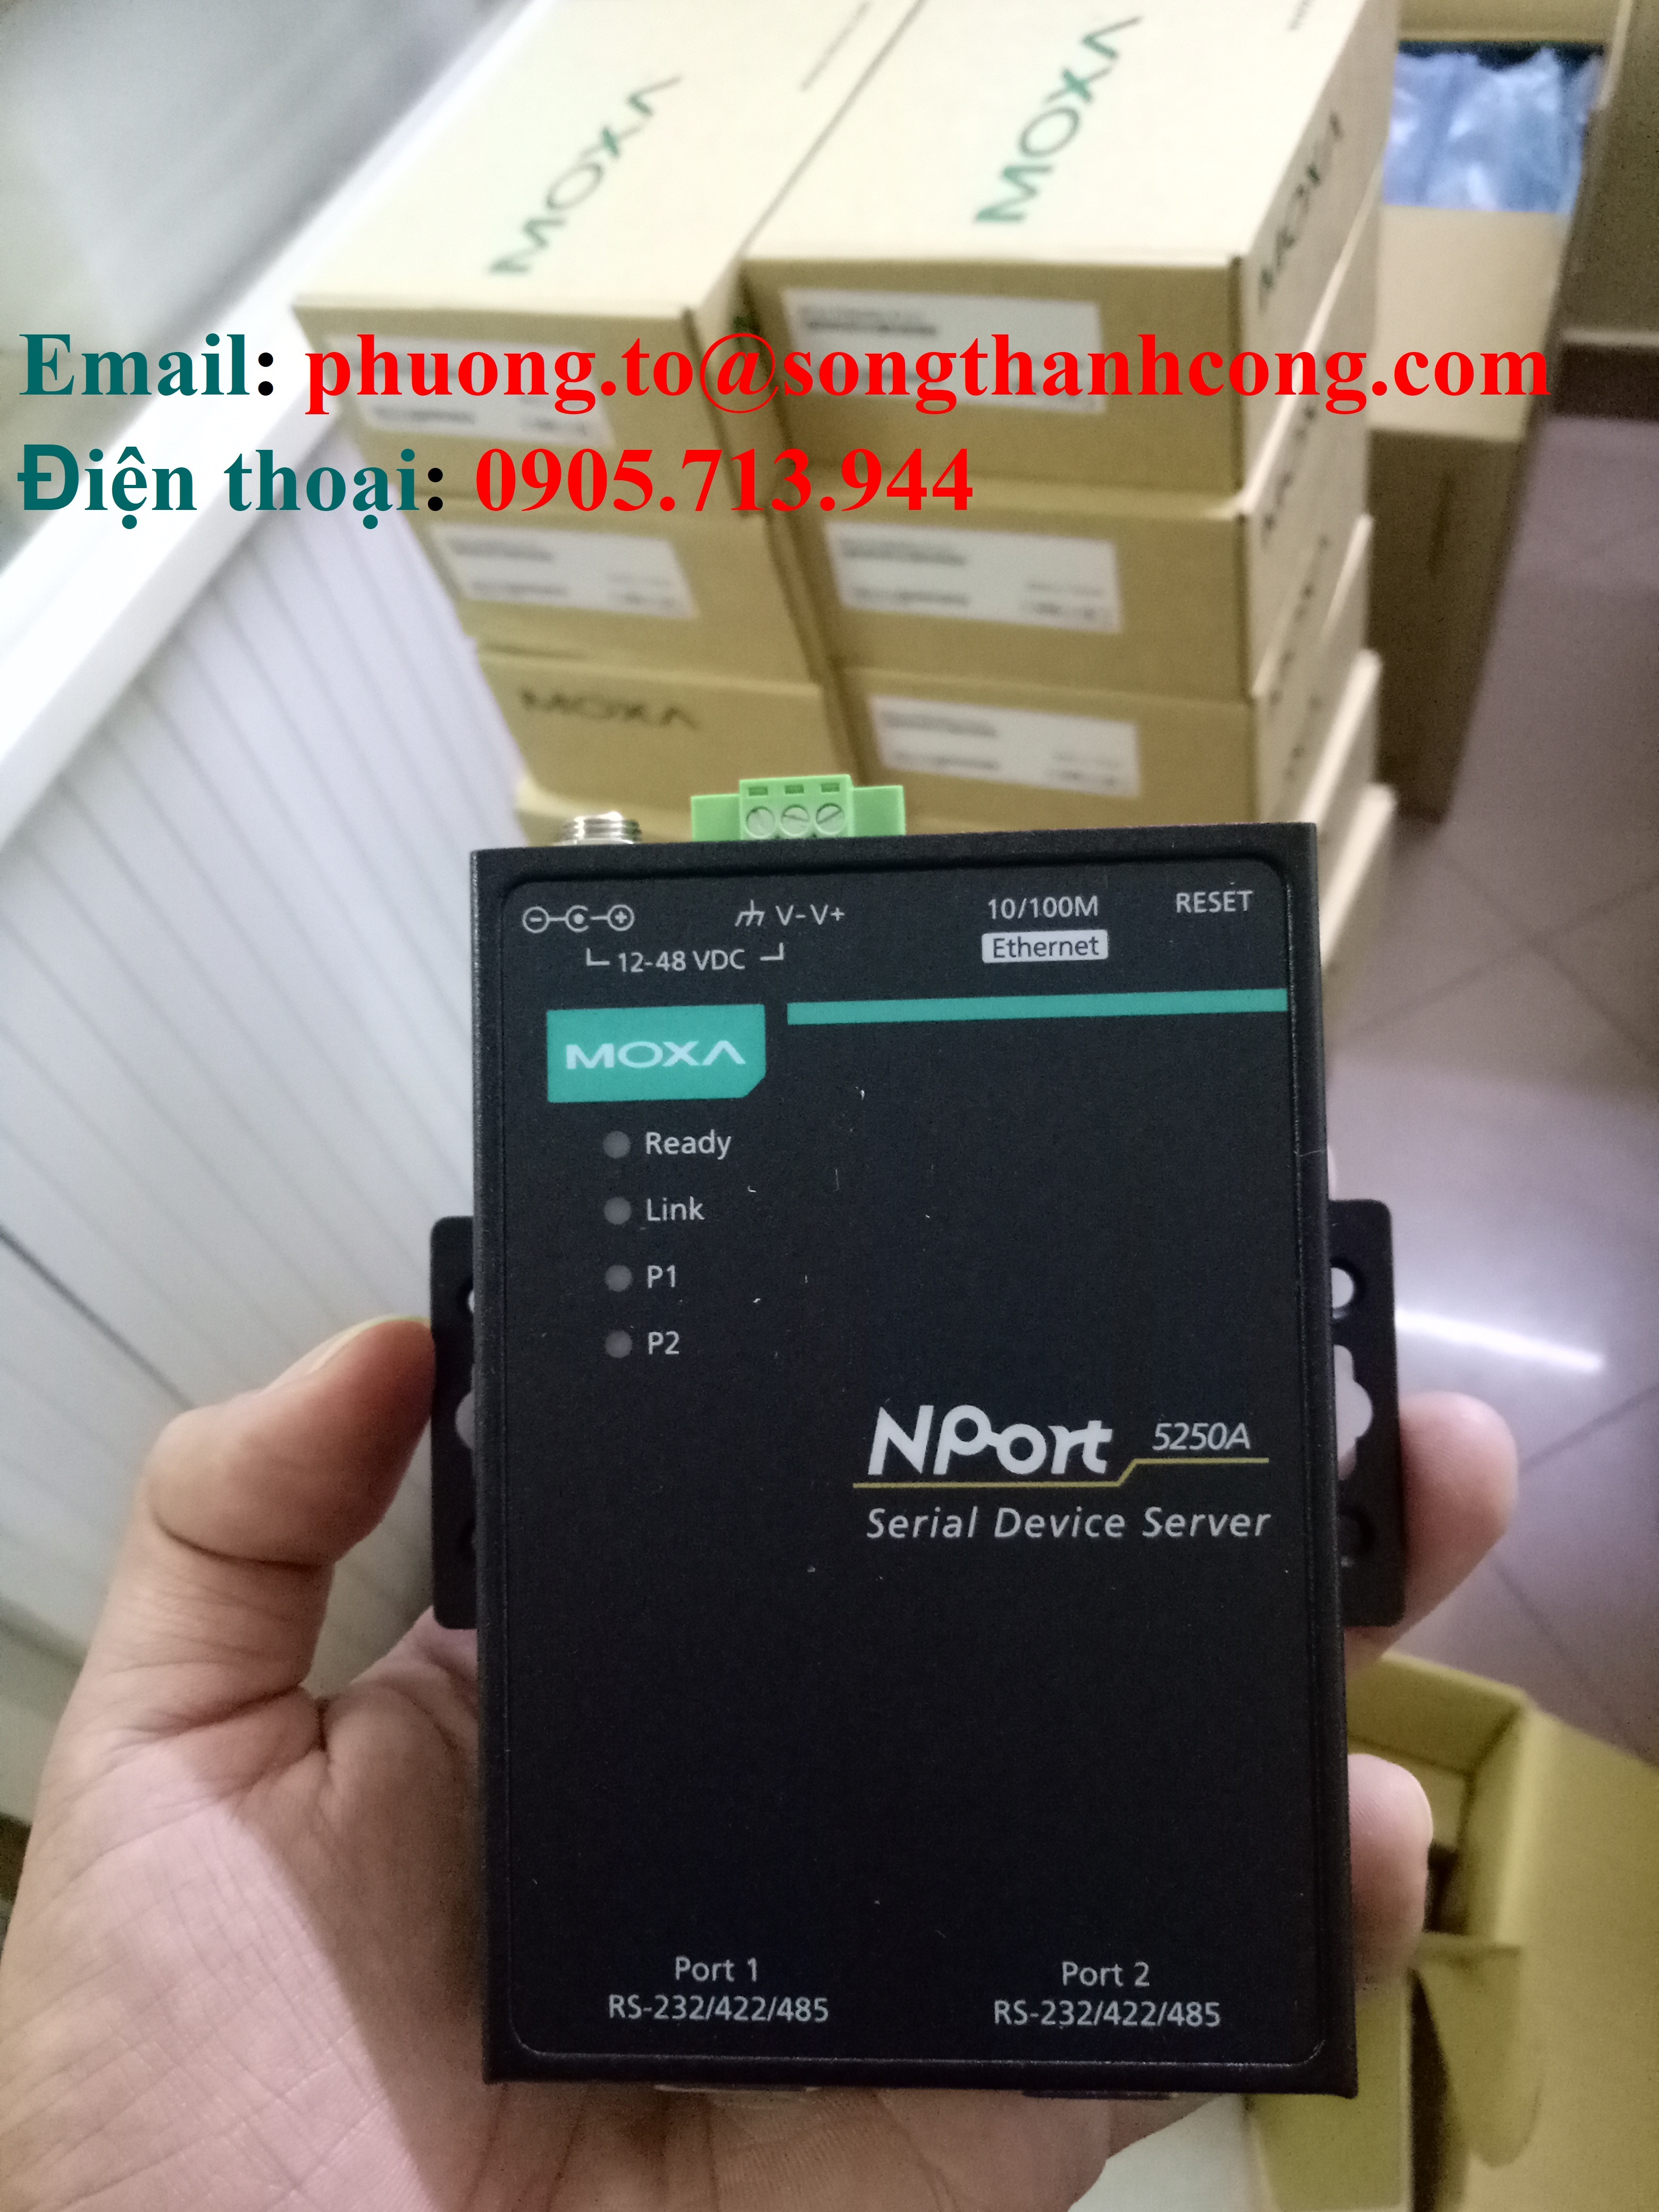 nport-5250a-bo-chuyen-doi-1-cong-rs232-485-422-sang-ethernet-moxa-viet-nam-moxa-vietnam.png